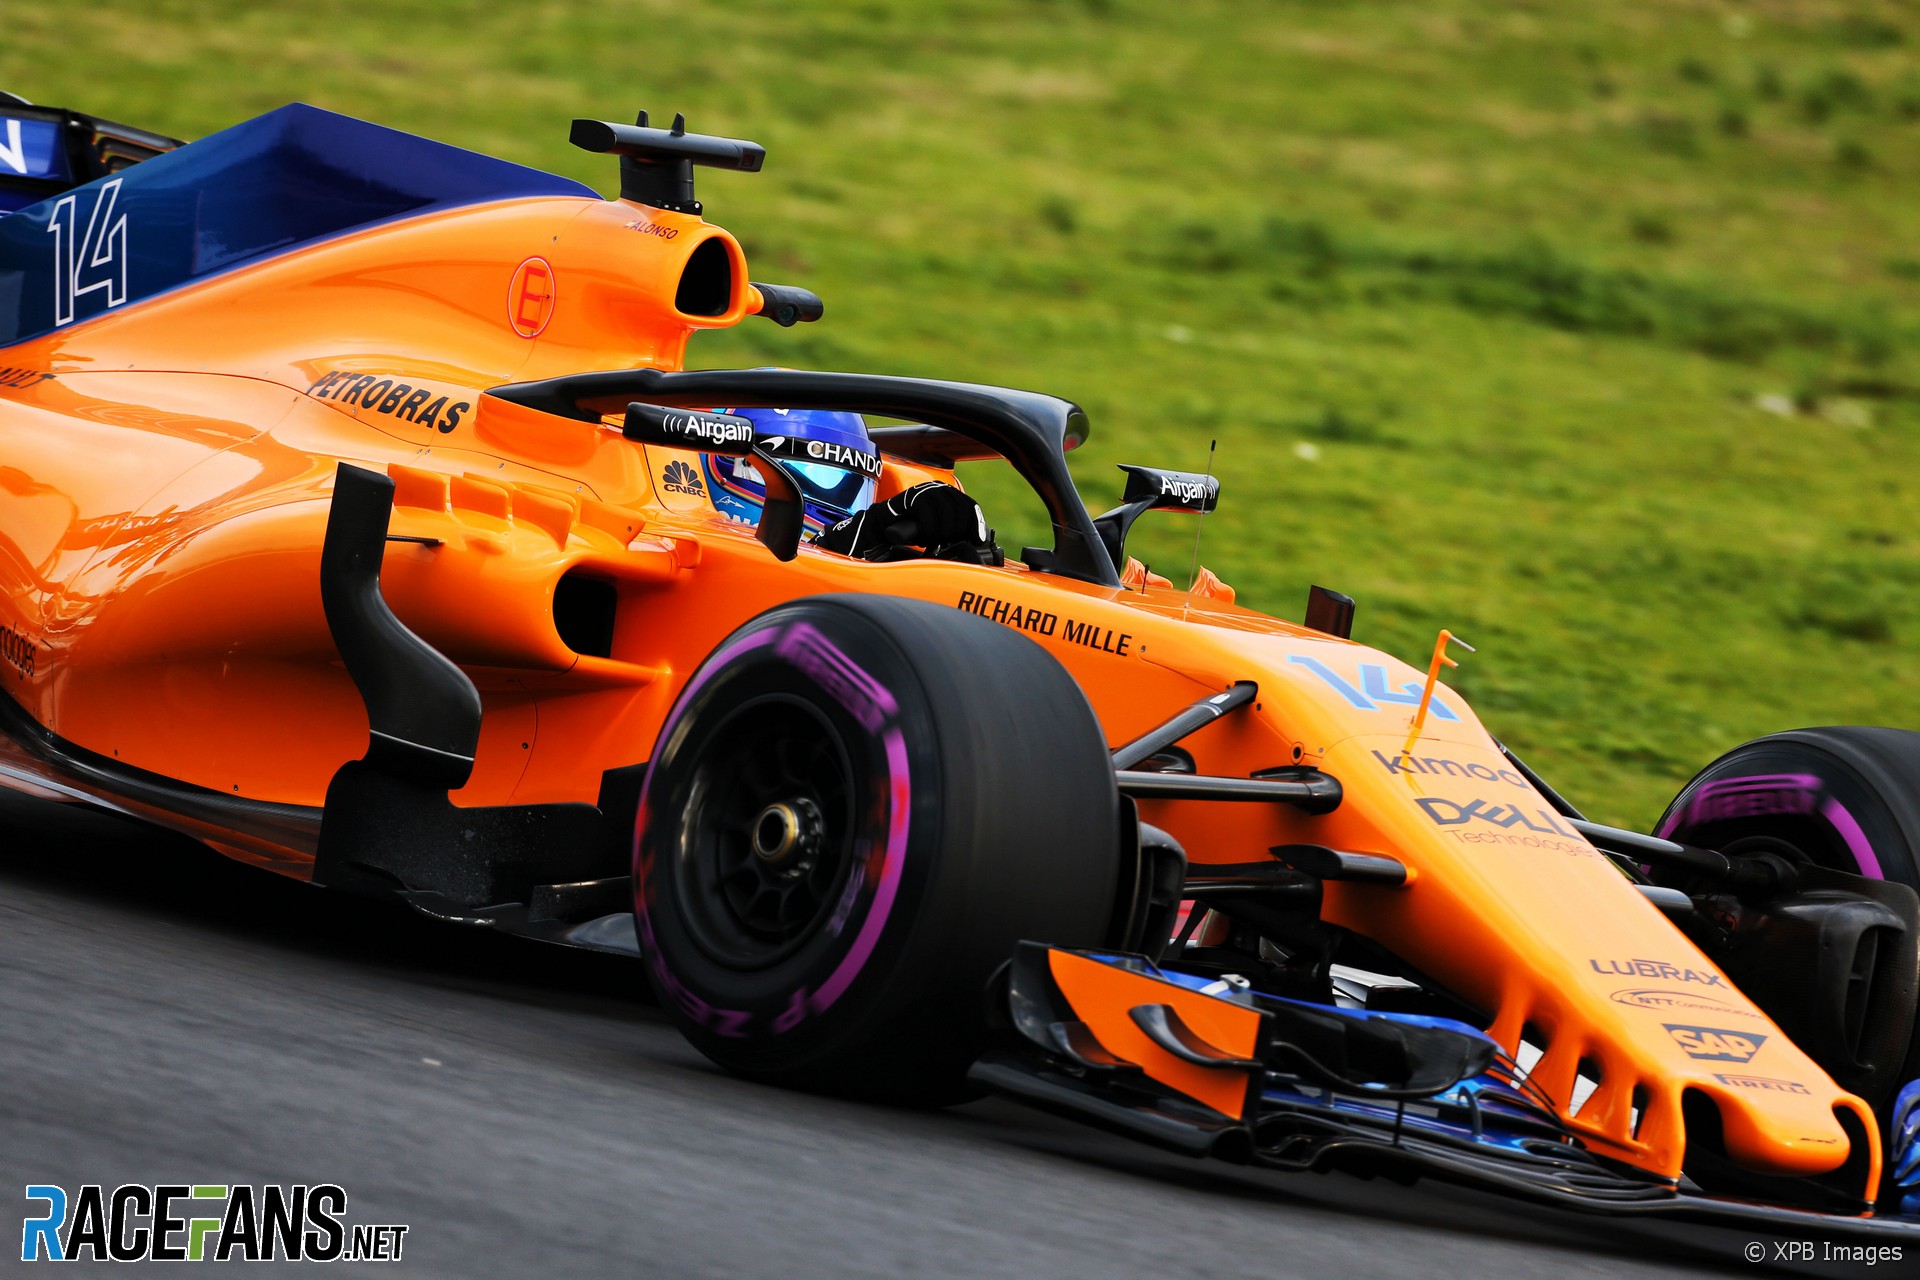 Fernando Alonso, McLaren, Circuit de Catalunya, 2018